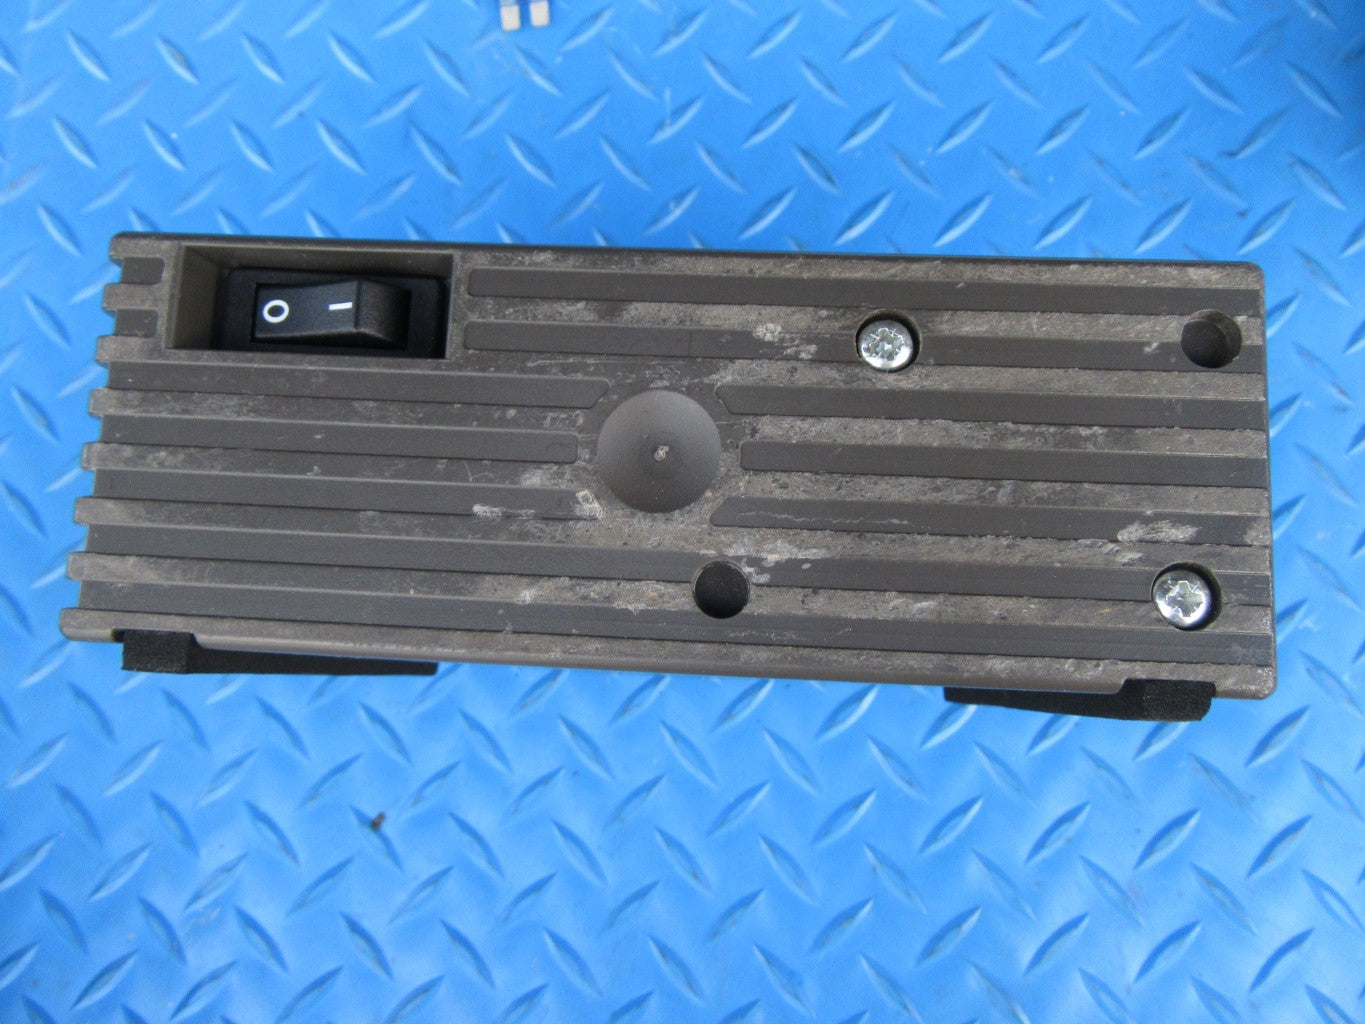 Lamborghini air compressor spare tire pump service tool kit #0598